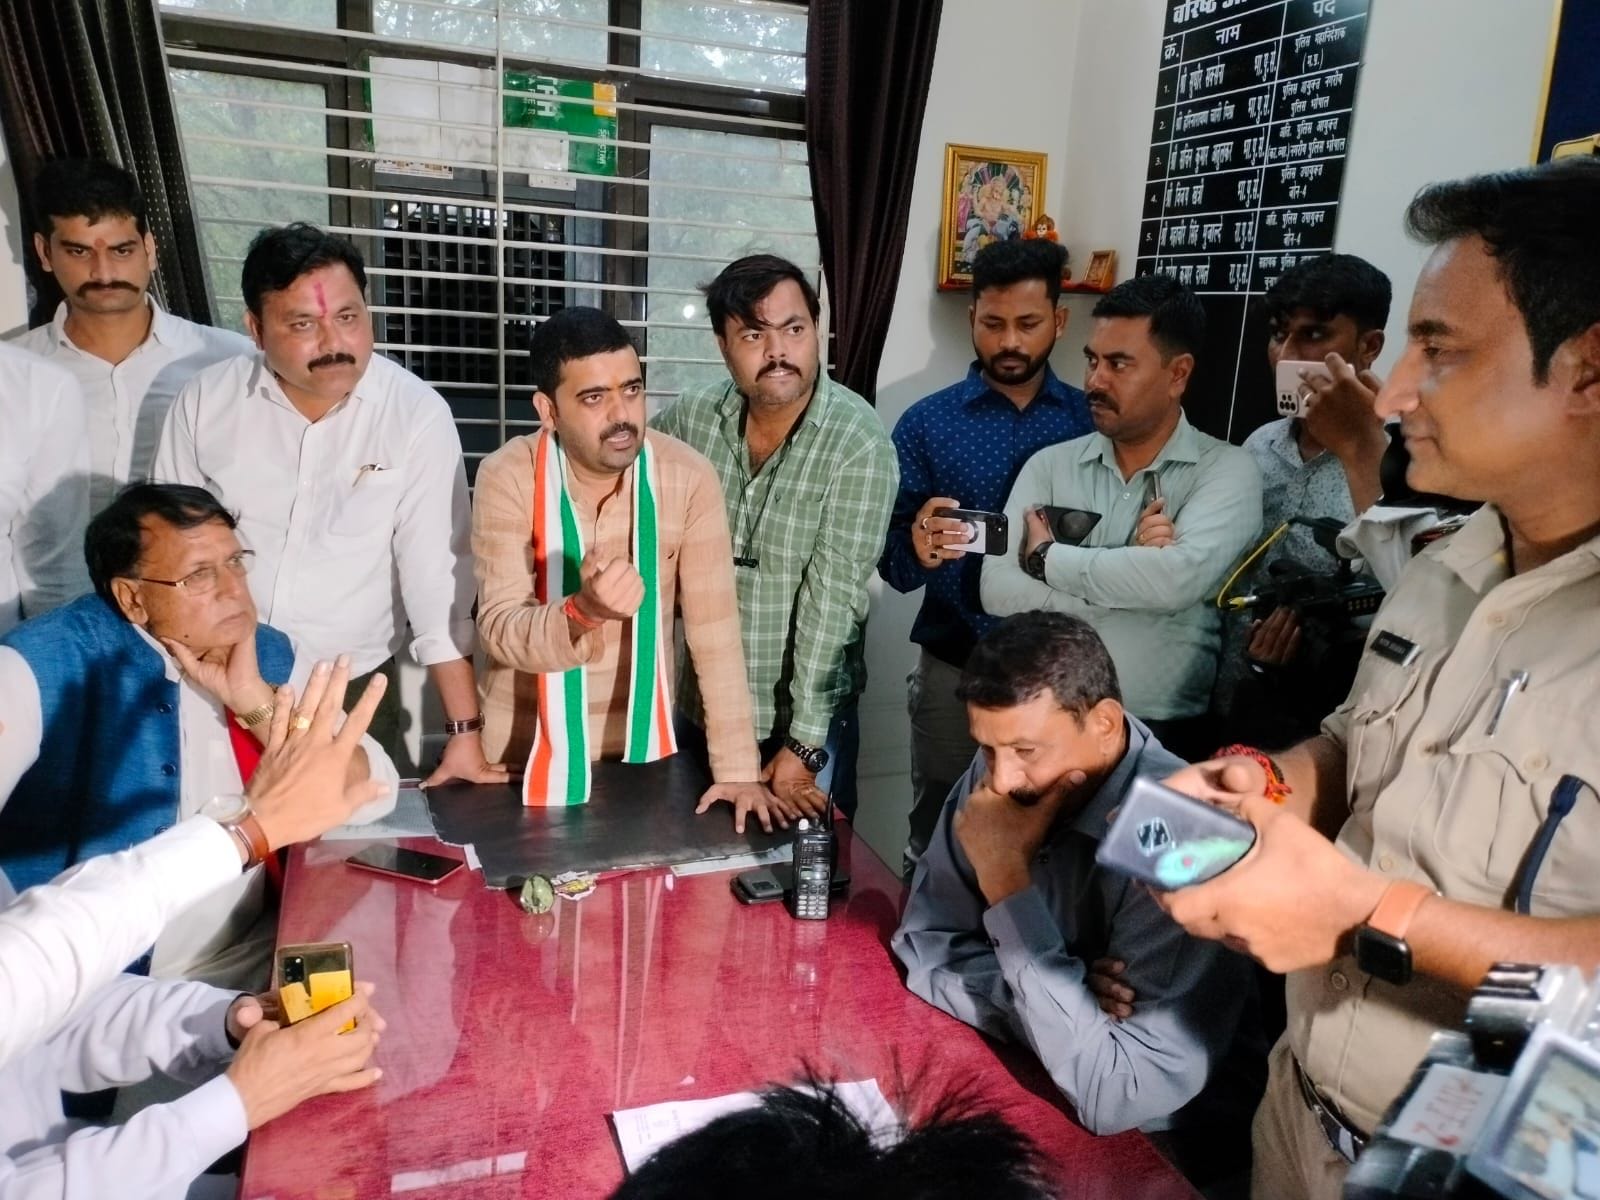 पीसीसी चीफ कमलनाथ के आपत्तिजनक POSTERS पर भड़की कांग्रेस, FIR दर्ज कराने पहुँची थाने Congress furious over objectionable posters of PCC chief Kamal Nath, reaches police station to register FIR